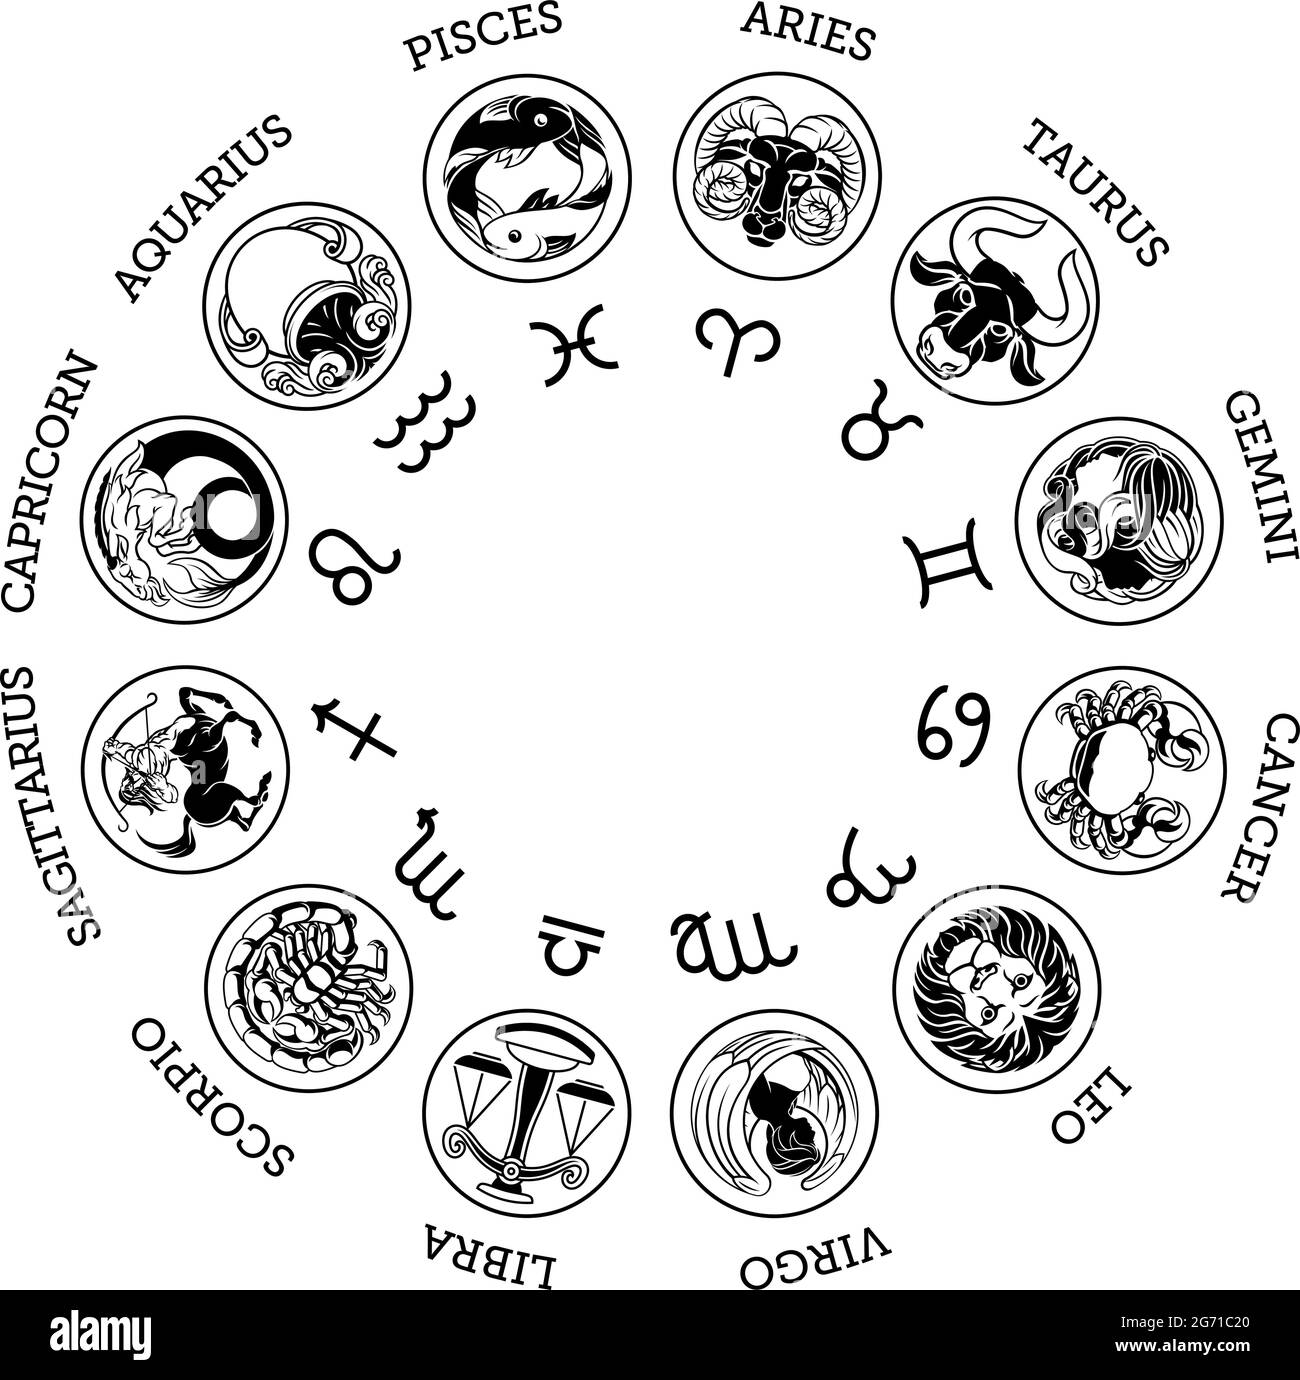 Astrology stars symbols zodiac lion Black and White Stock Photos